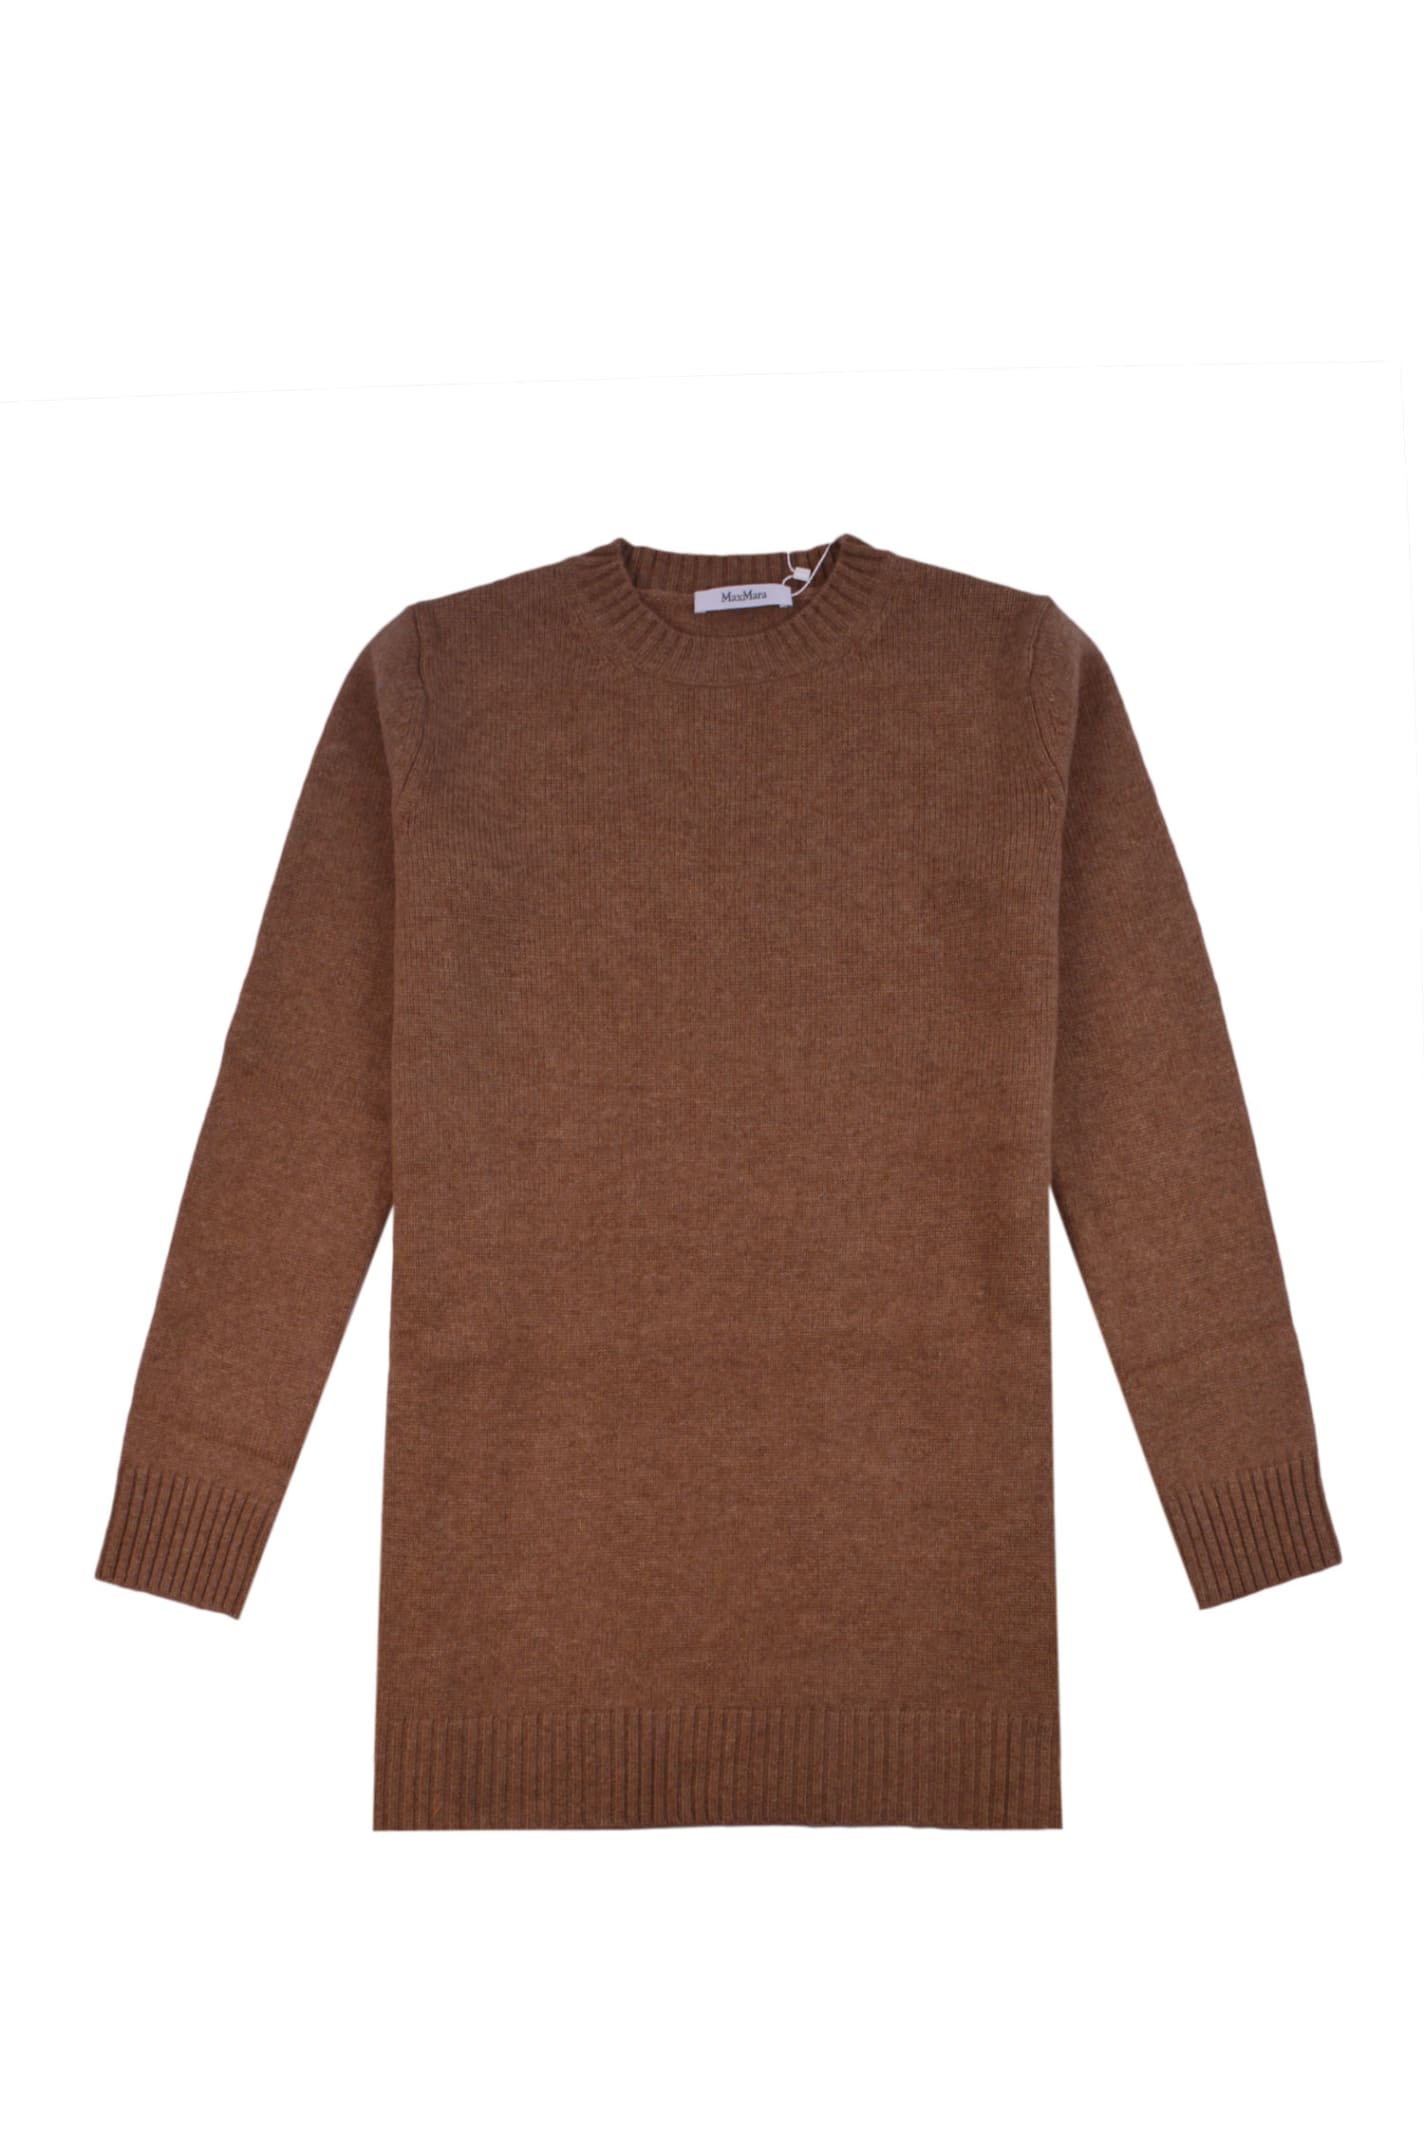 Max Mara Sweater In Brown